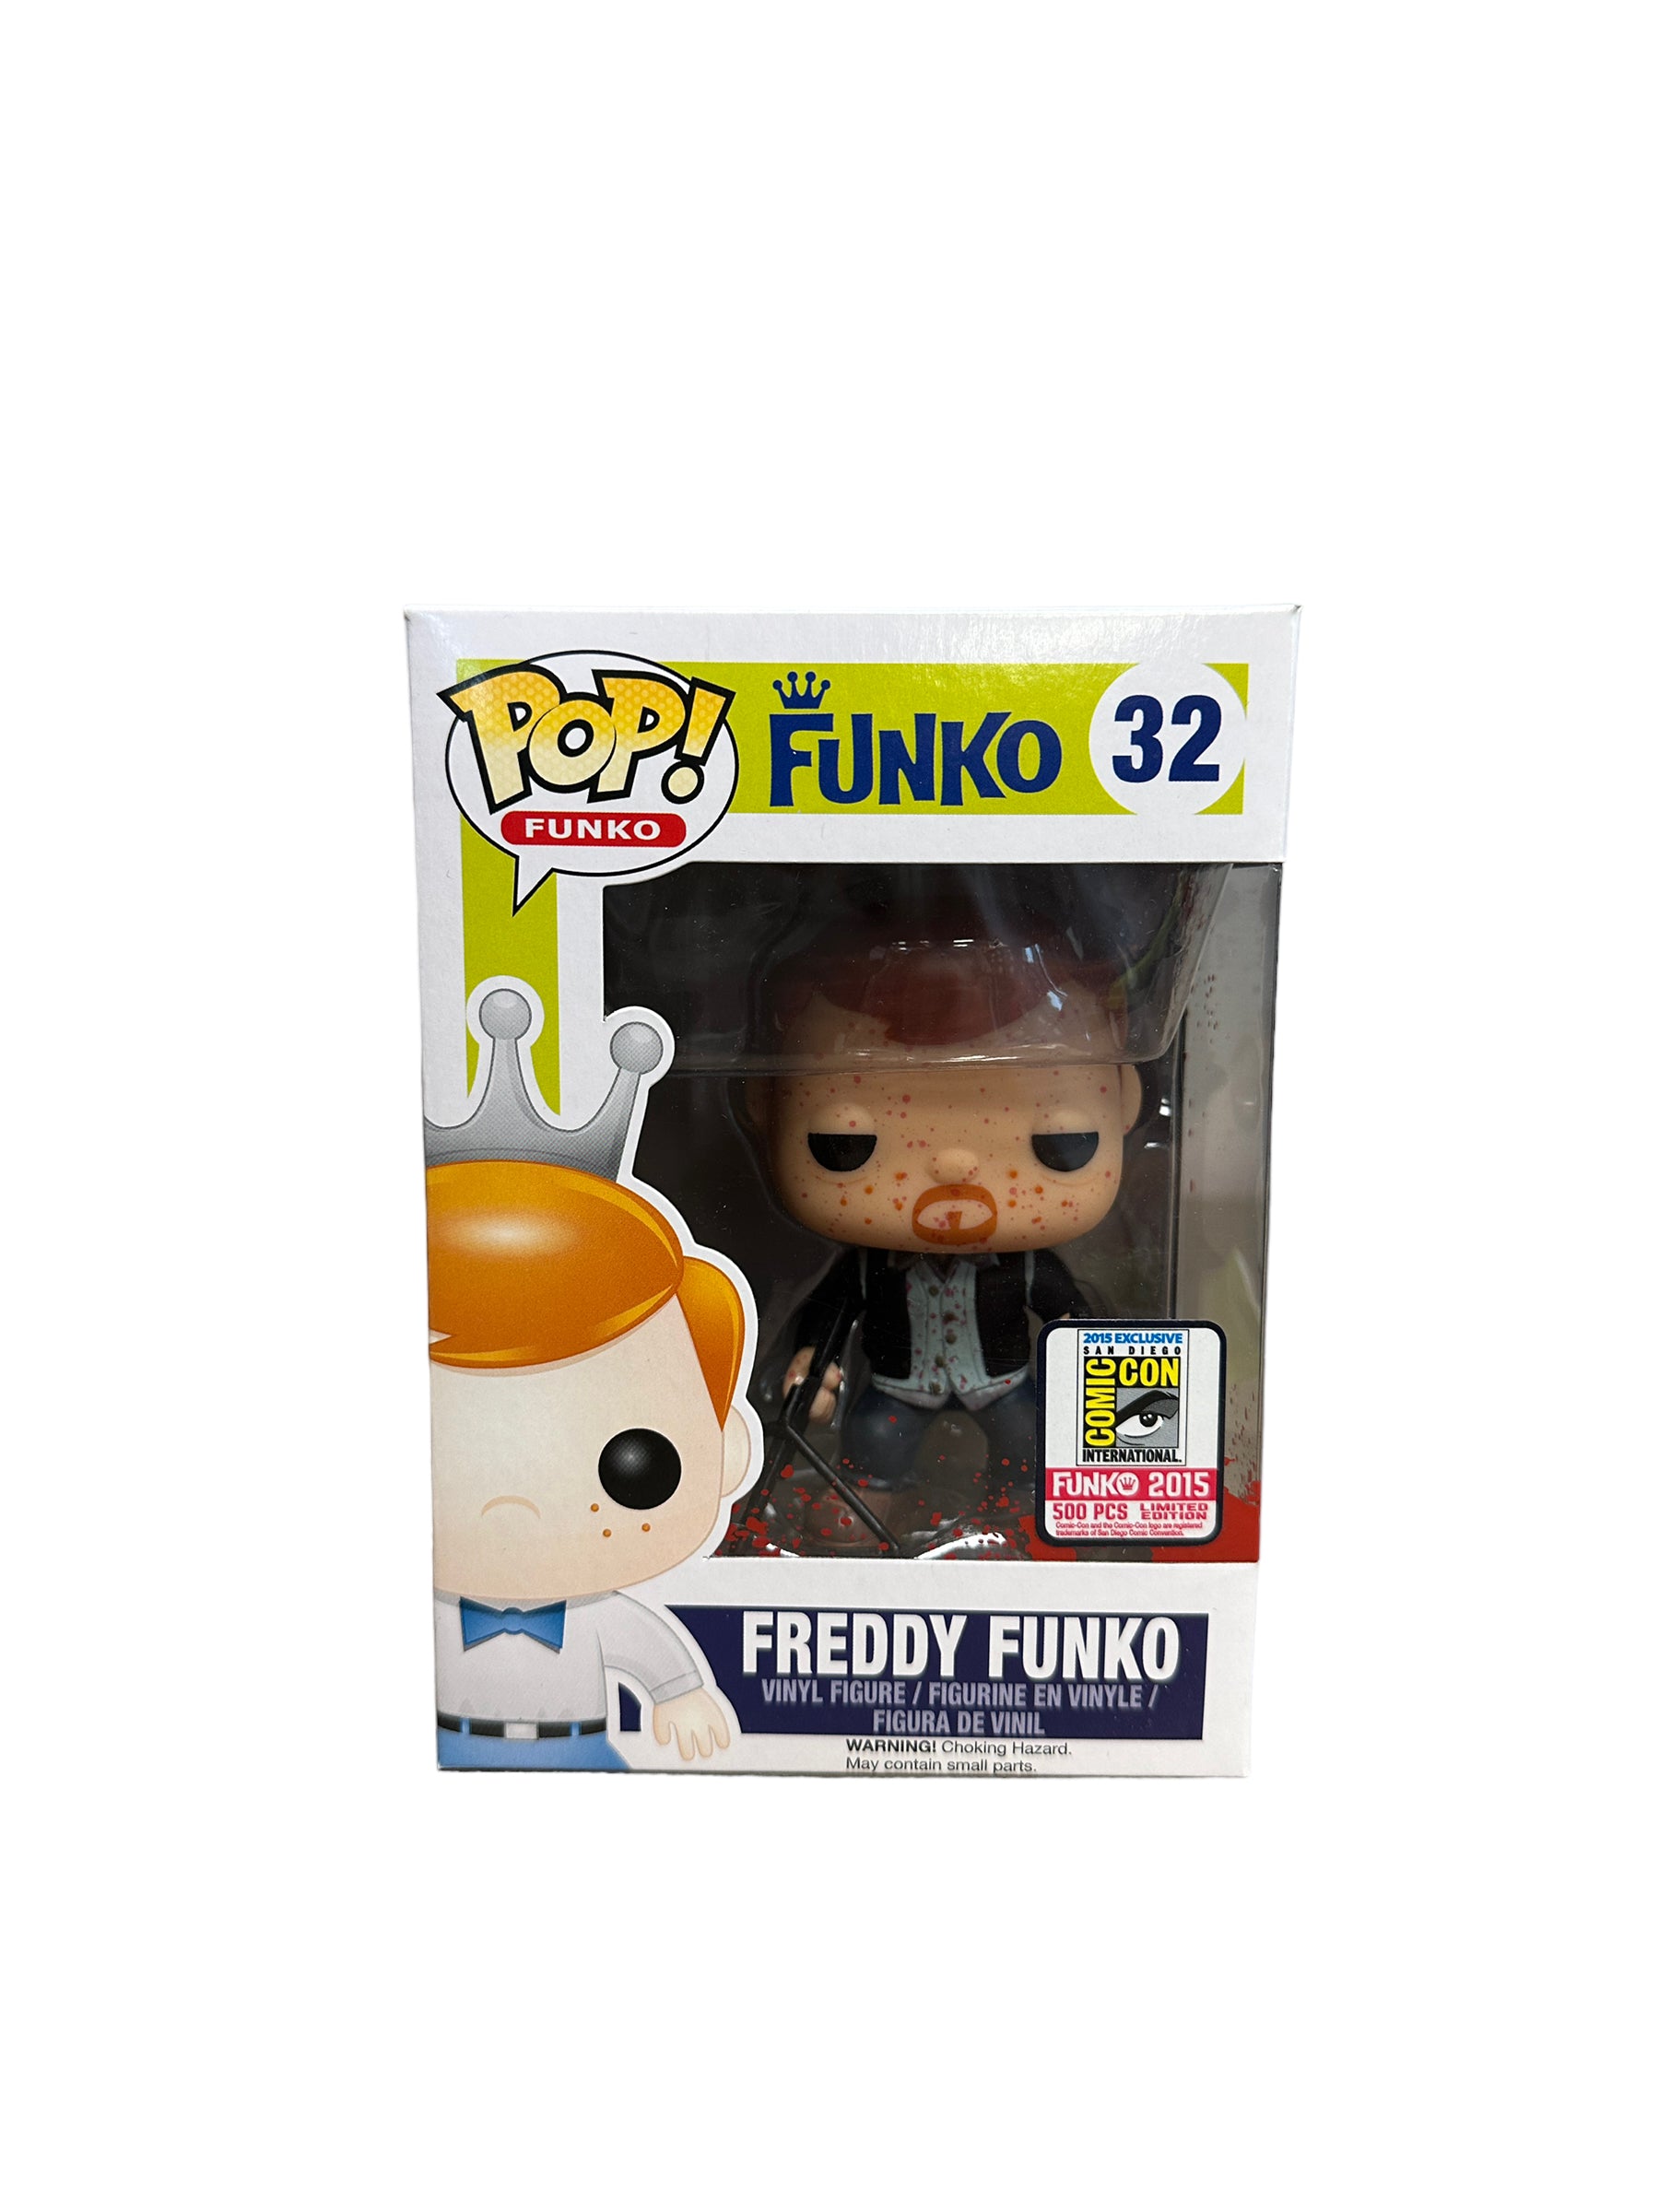 Freddy Funko as Daryl Dixon #32 (Bloody) Funko Pop! - SDCC 2015 Exclusive LE500 Pcs - Condition 9.25/10